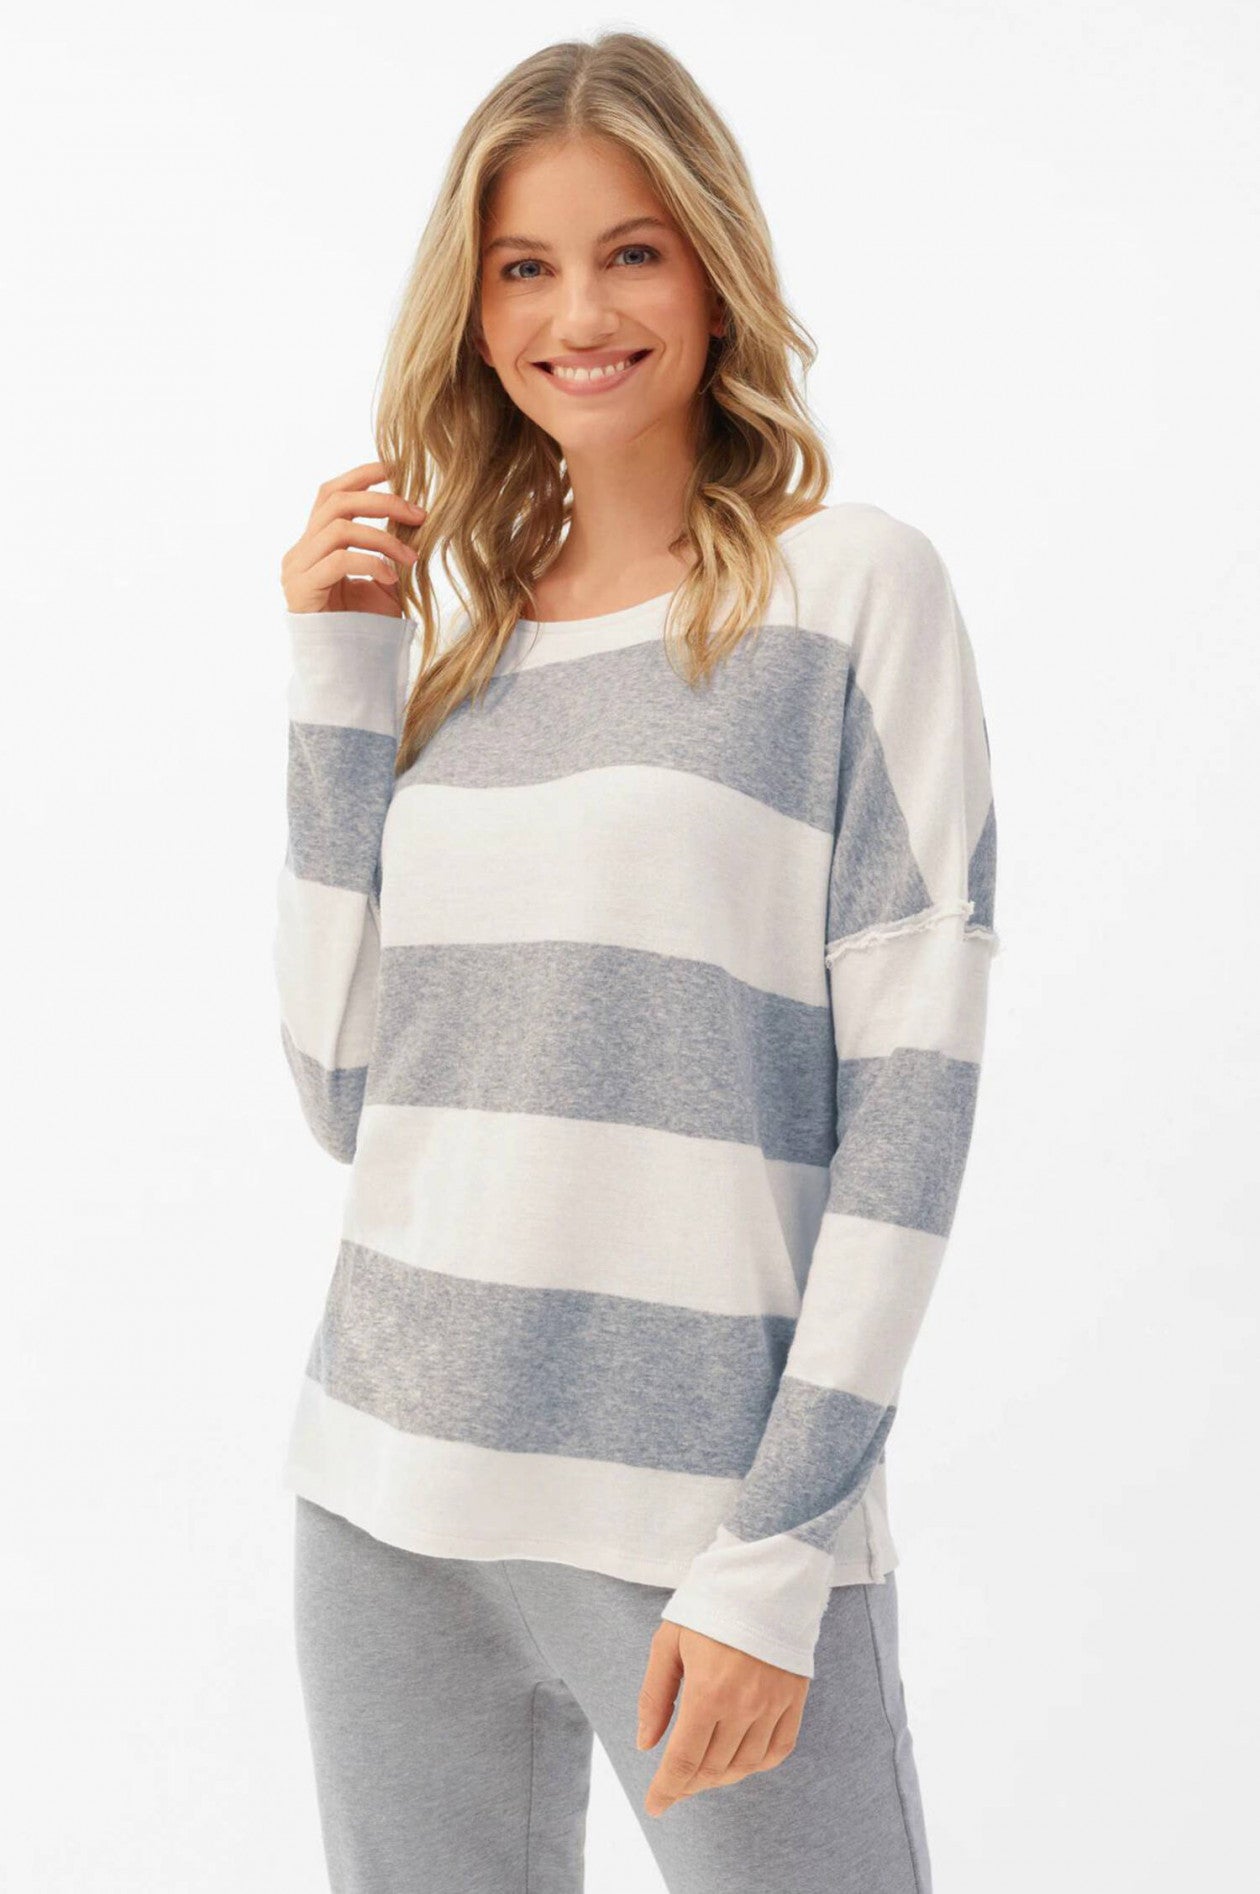 Cash Mix Striped Sweater